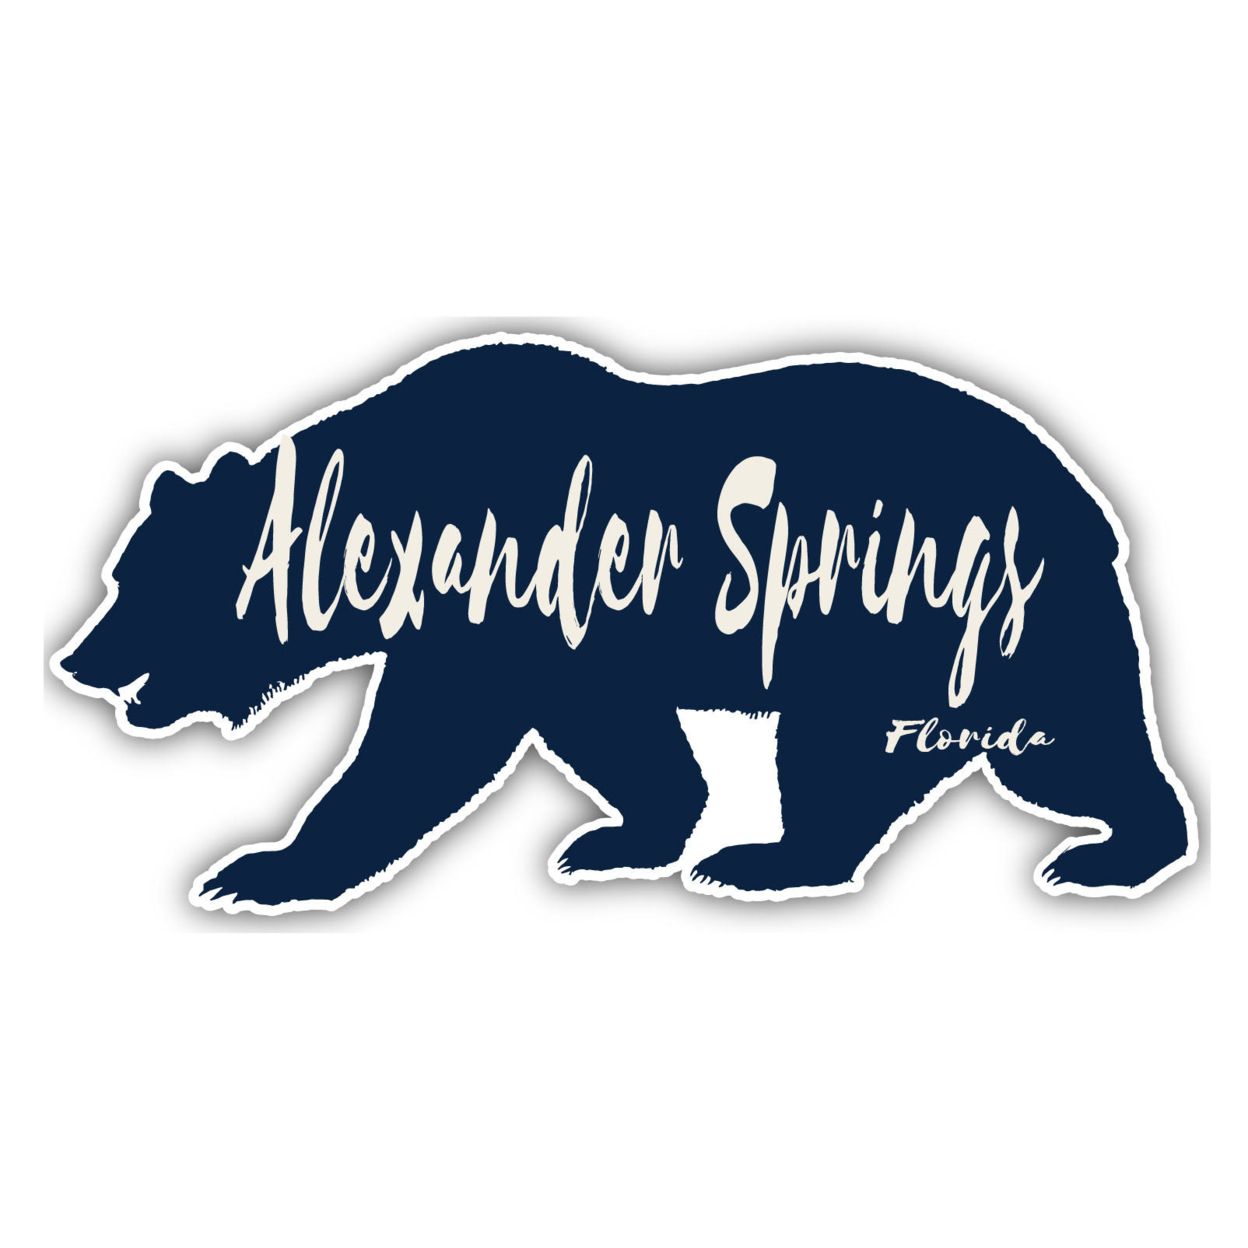 Alexander Springs Florida Souvenir Decorative Stickers (Choose Theme And Size) - Single Unit, 12-Inch, Tent